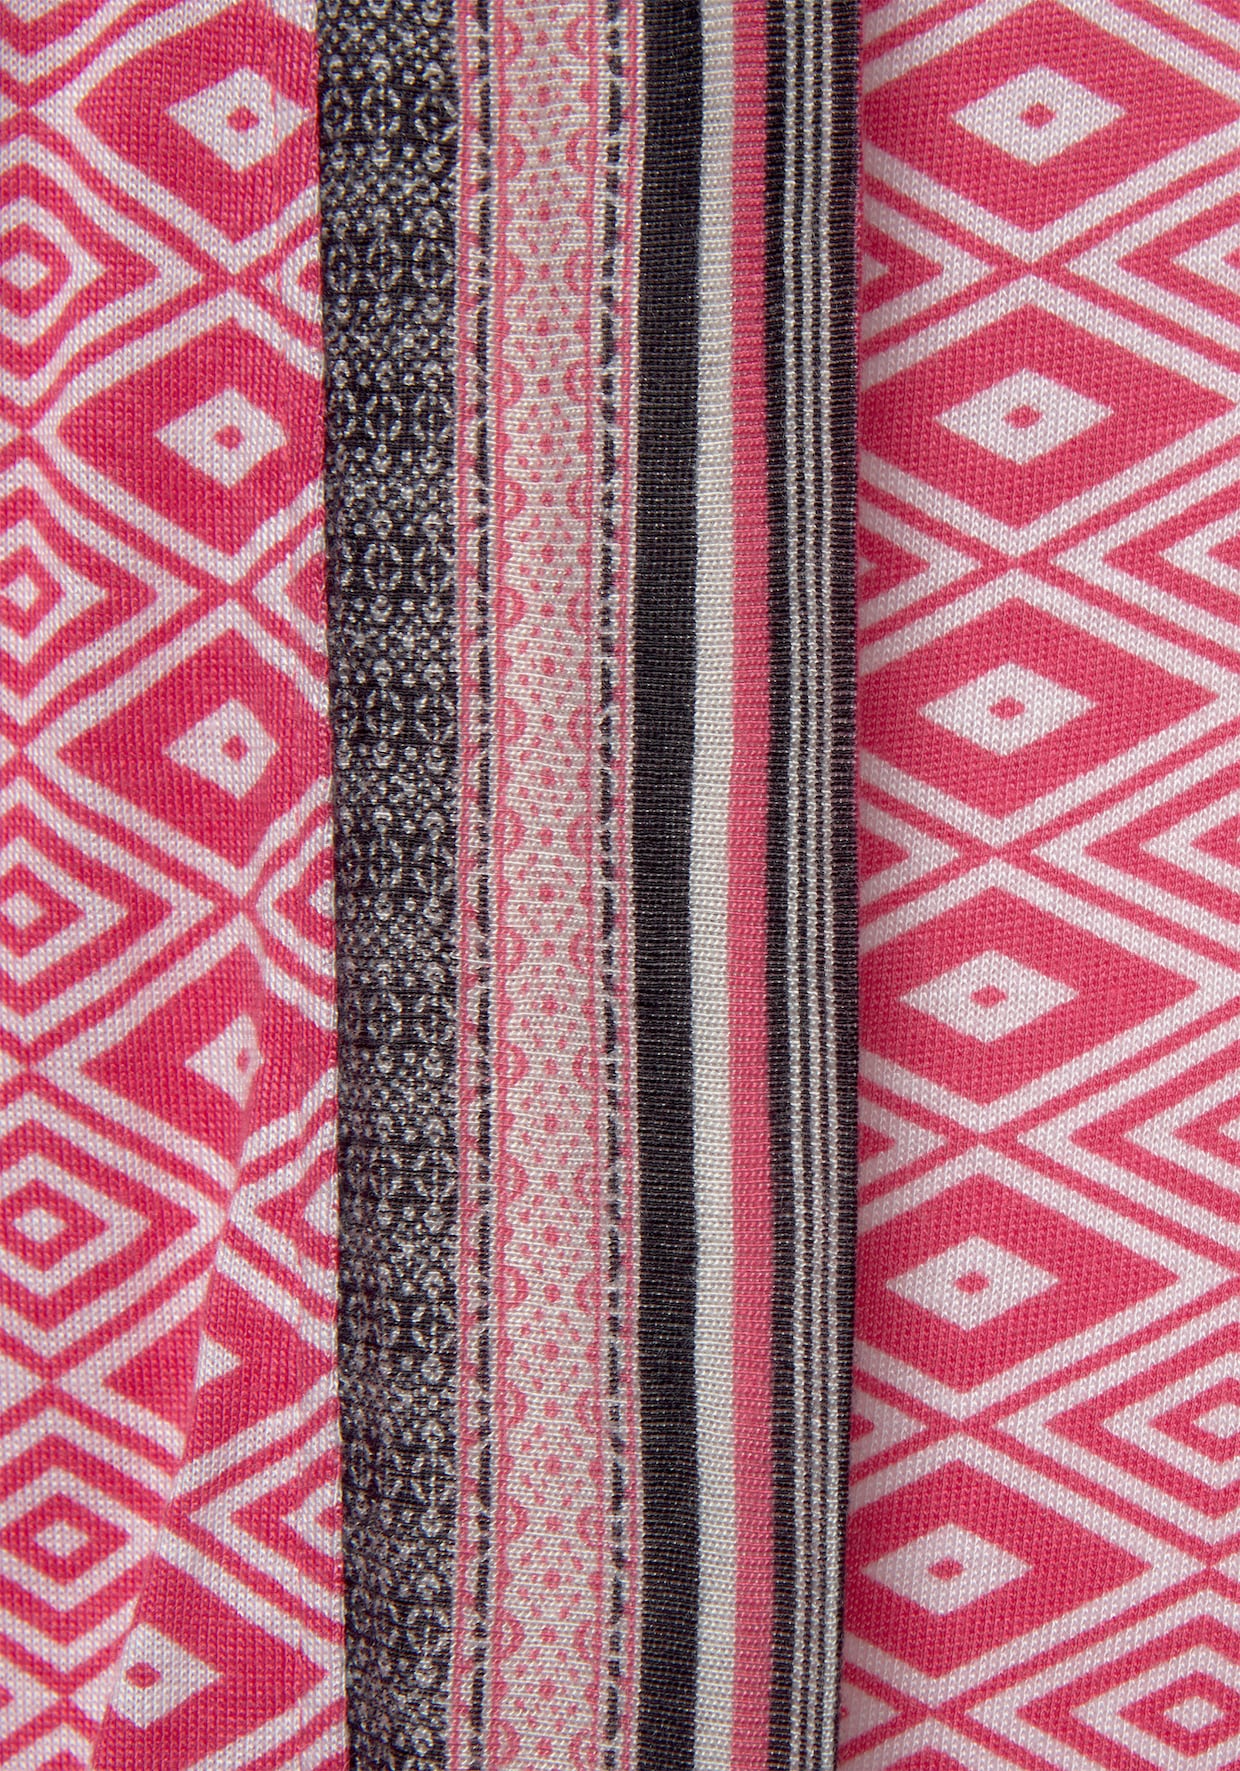 Vivance Dreams Kimono - pink gedessineerd